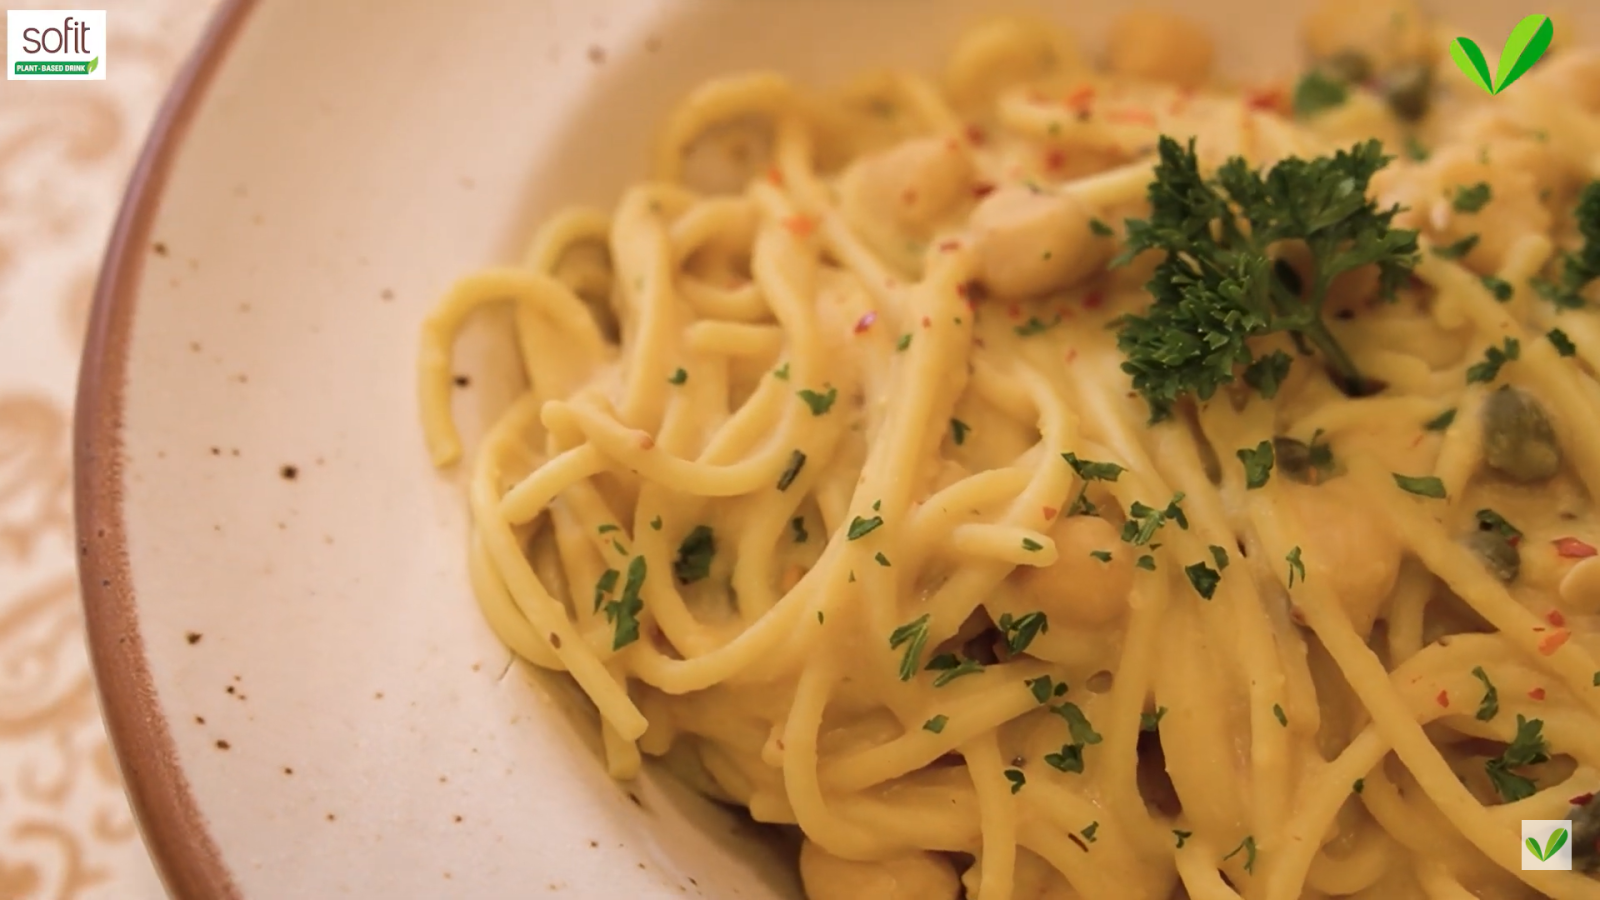 veganfirst_sofit_recipe_pasta_spaghetti_chickpea